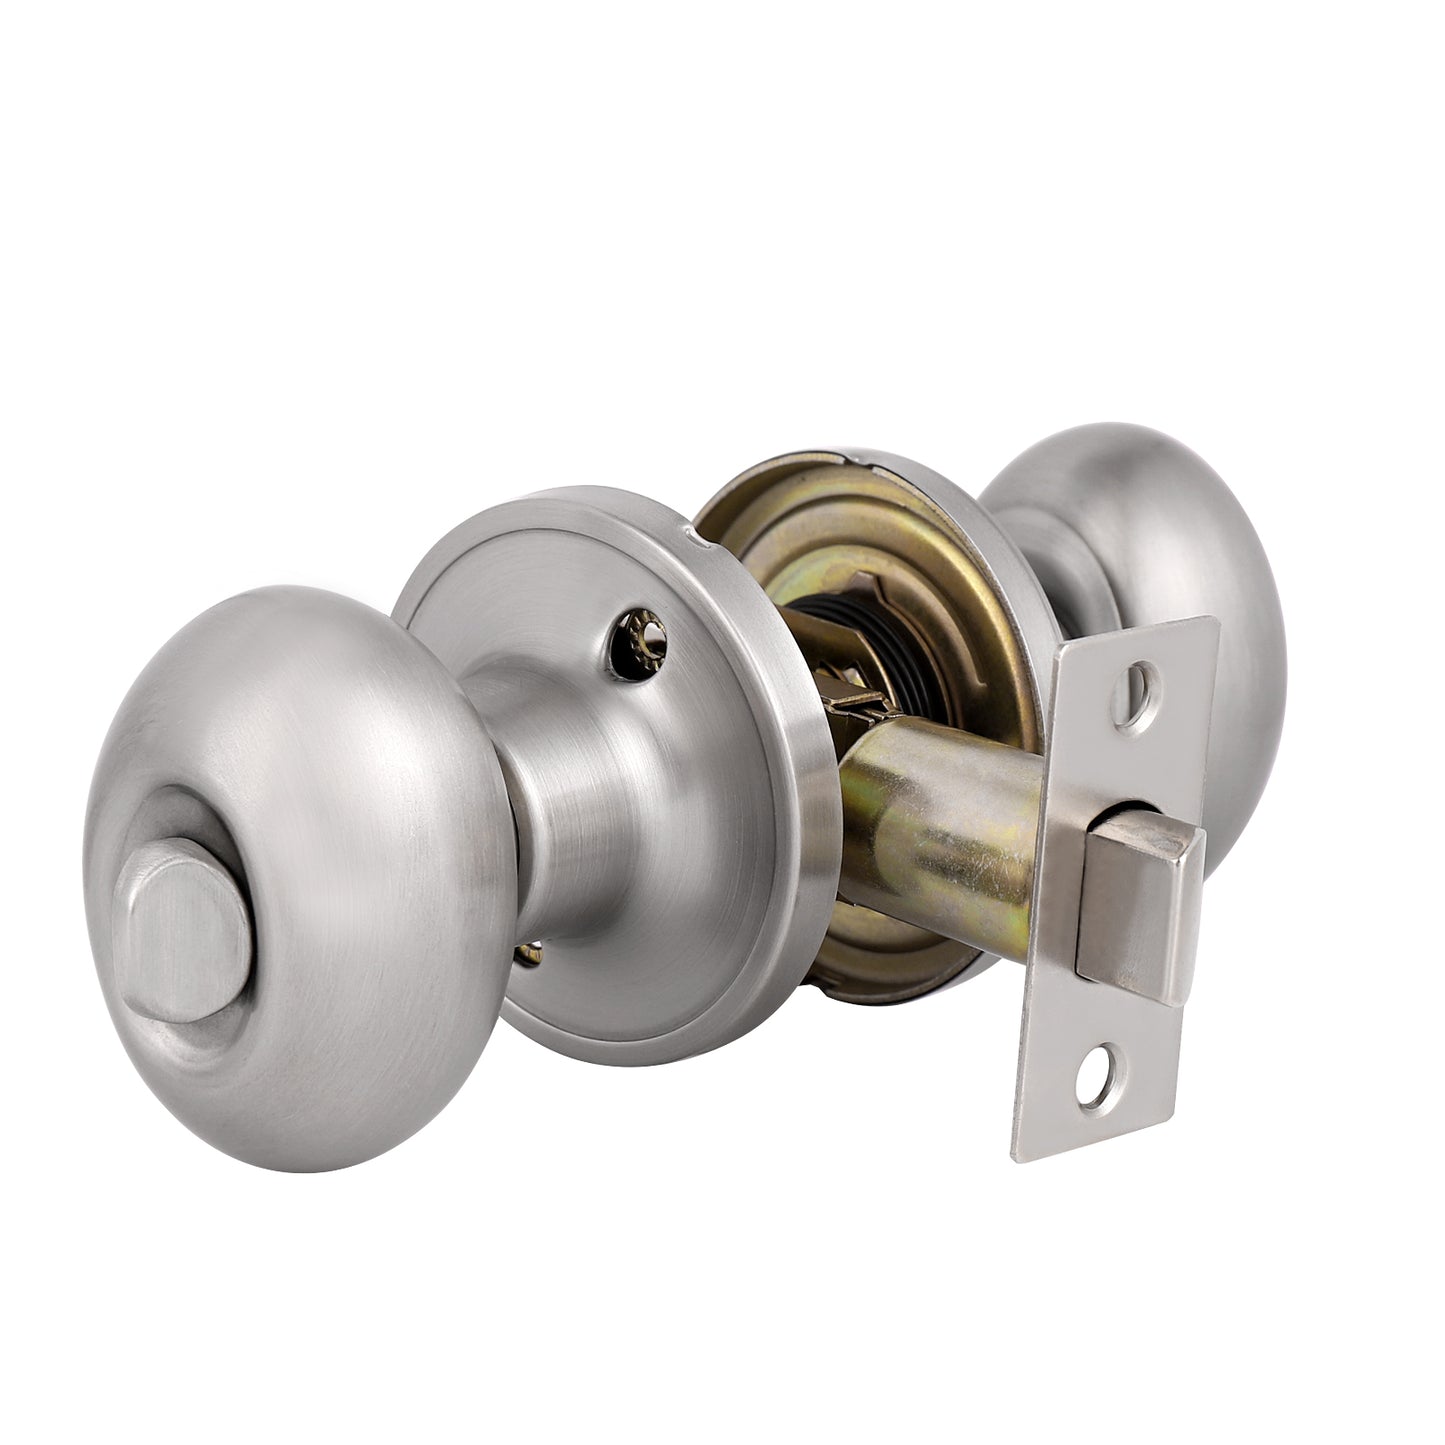 Privacy Door Knobs Bedroom/Bathroom Door Lock set No Key Egg Knob Style Satin Nickel Finish DL692SNBK - Probrico